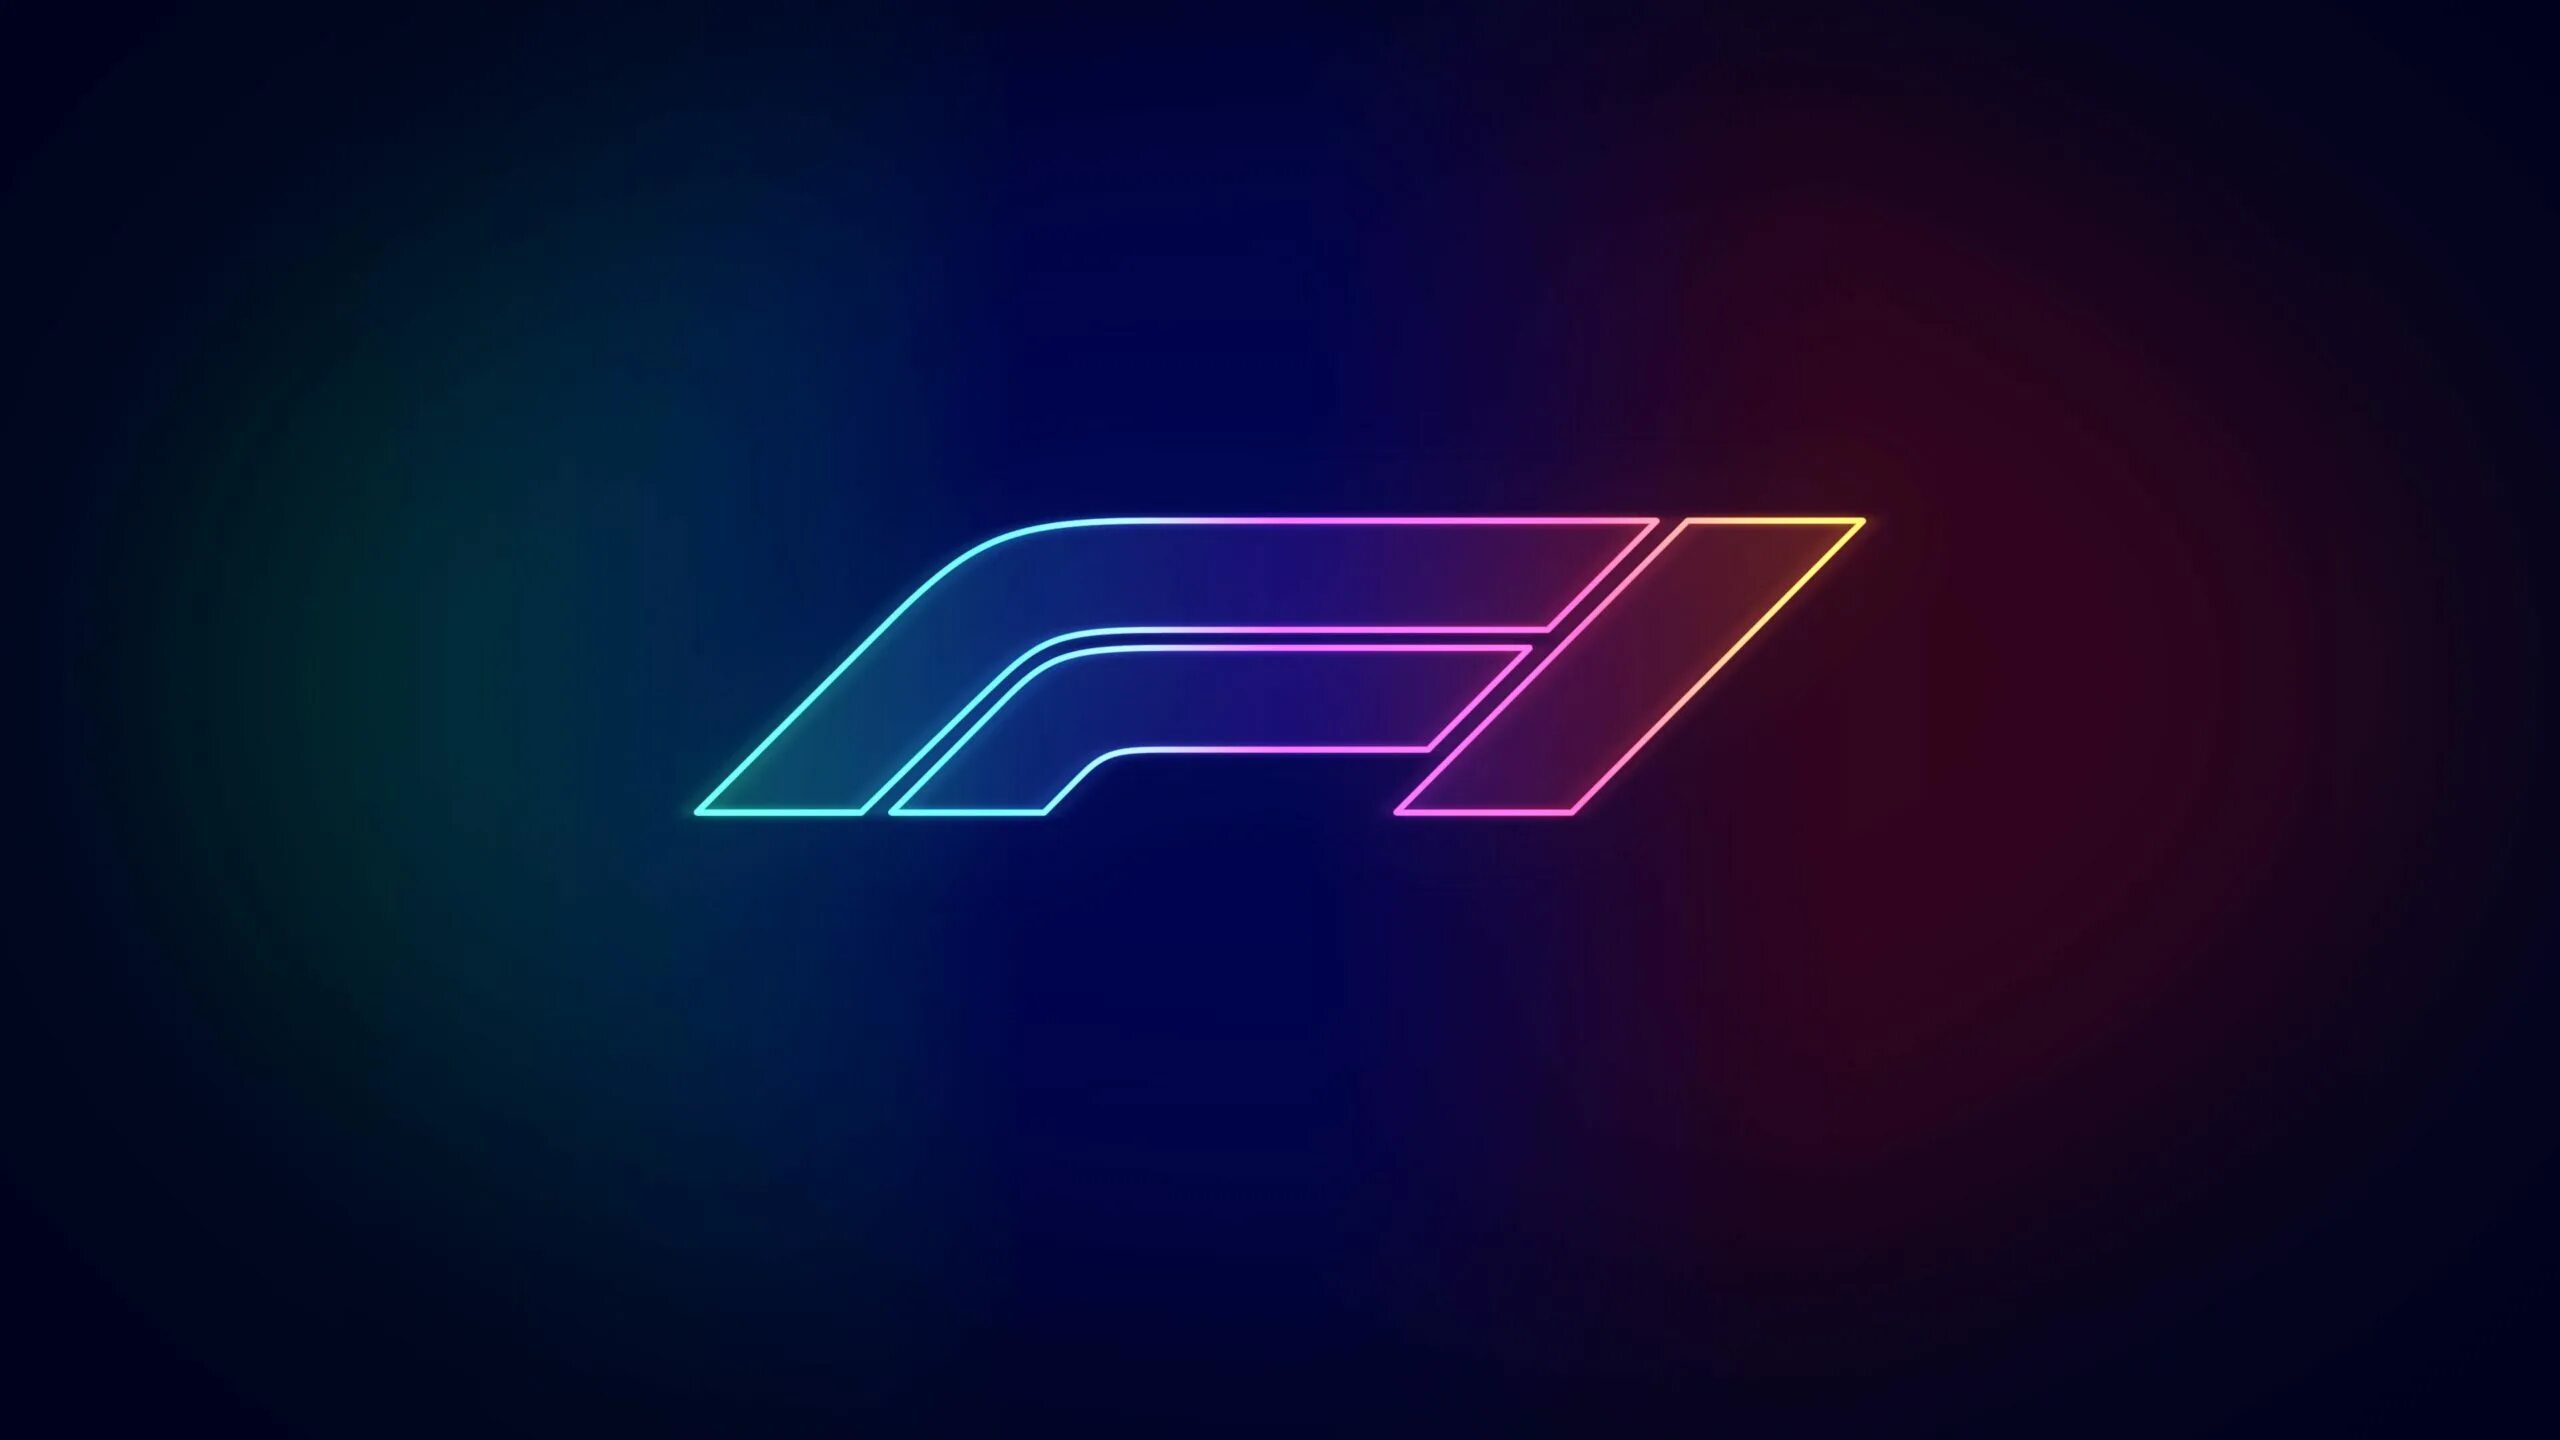 Формула 1 logo. Неон f1. F1 Formula logo. F1 2021 logo.